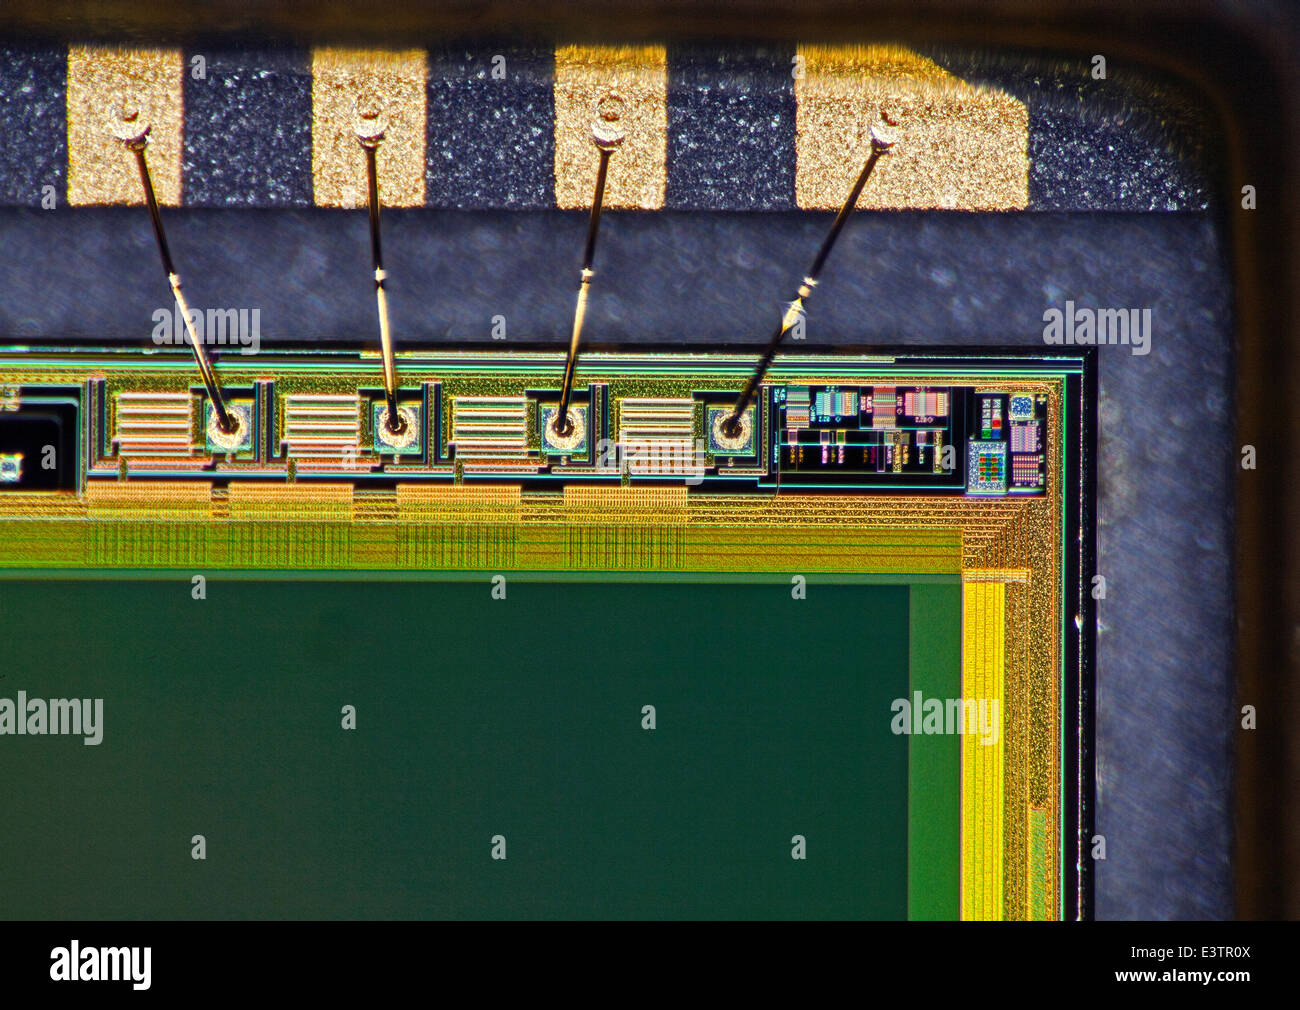 CMOS camera sensor, edge detail showing gold solder joints Stock Photo